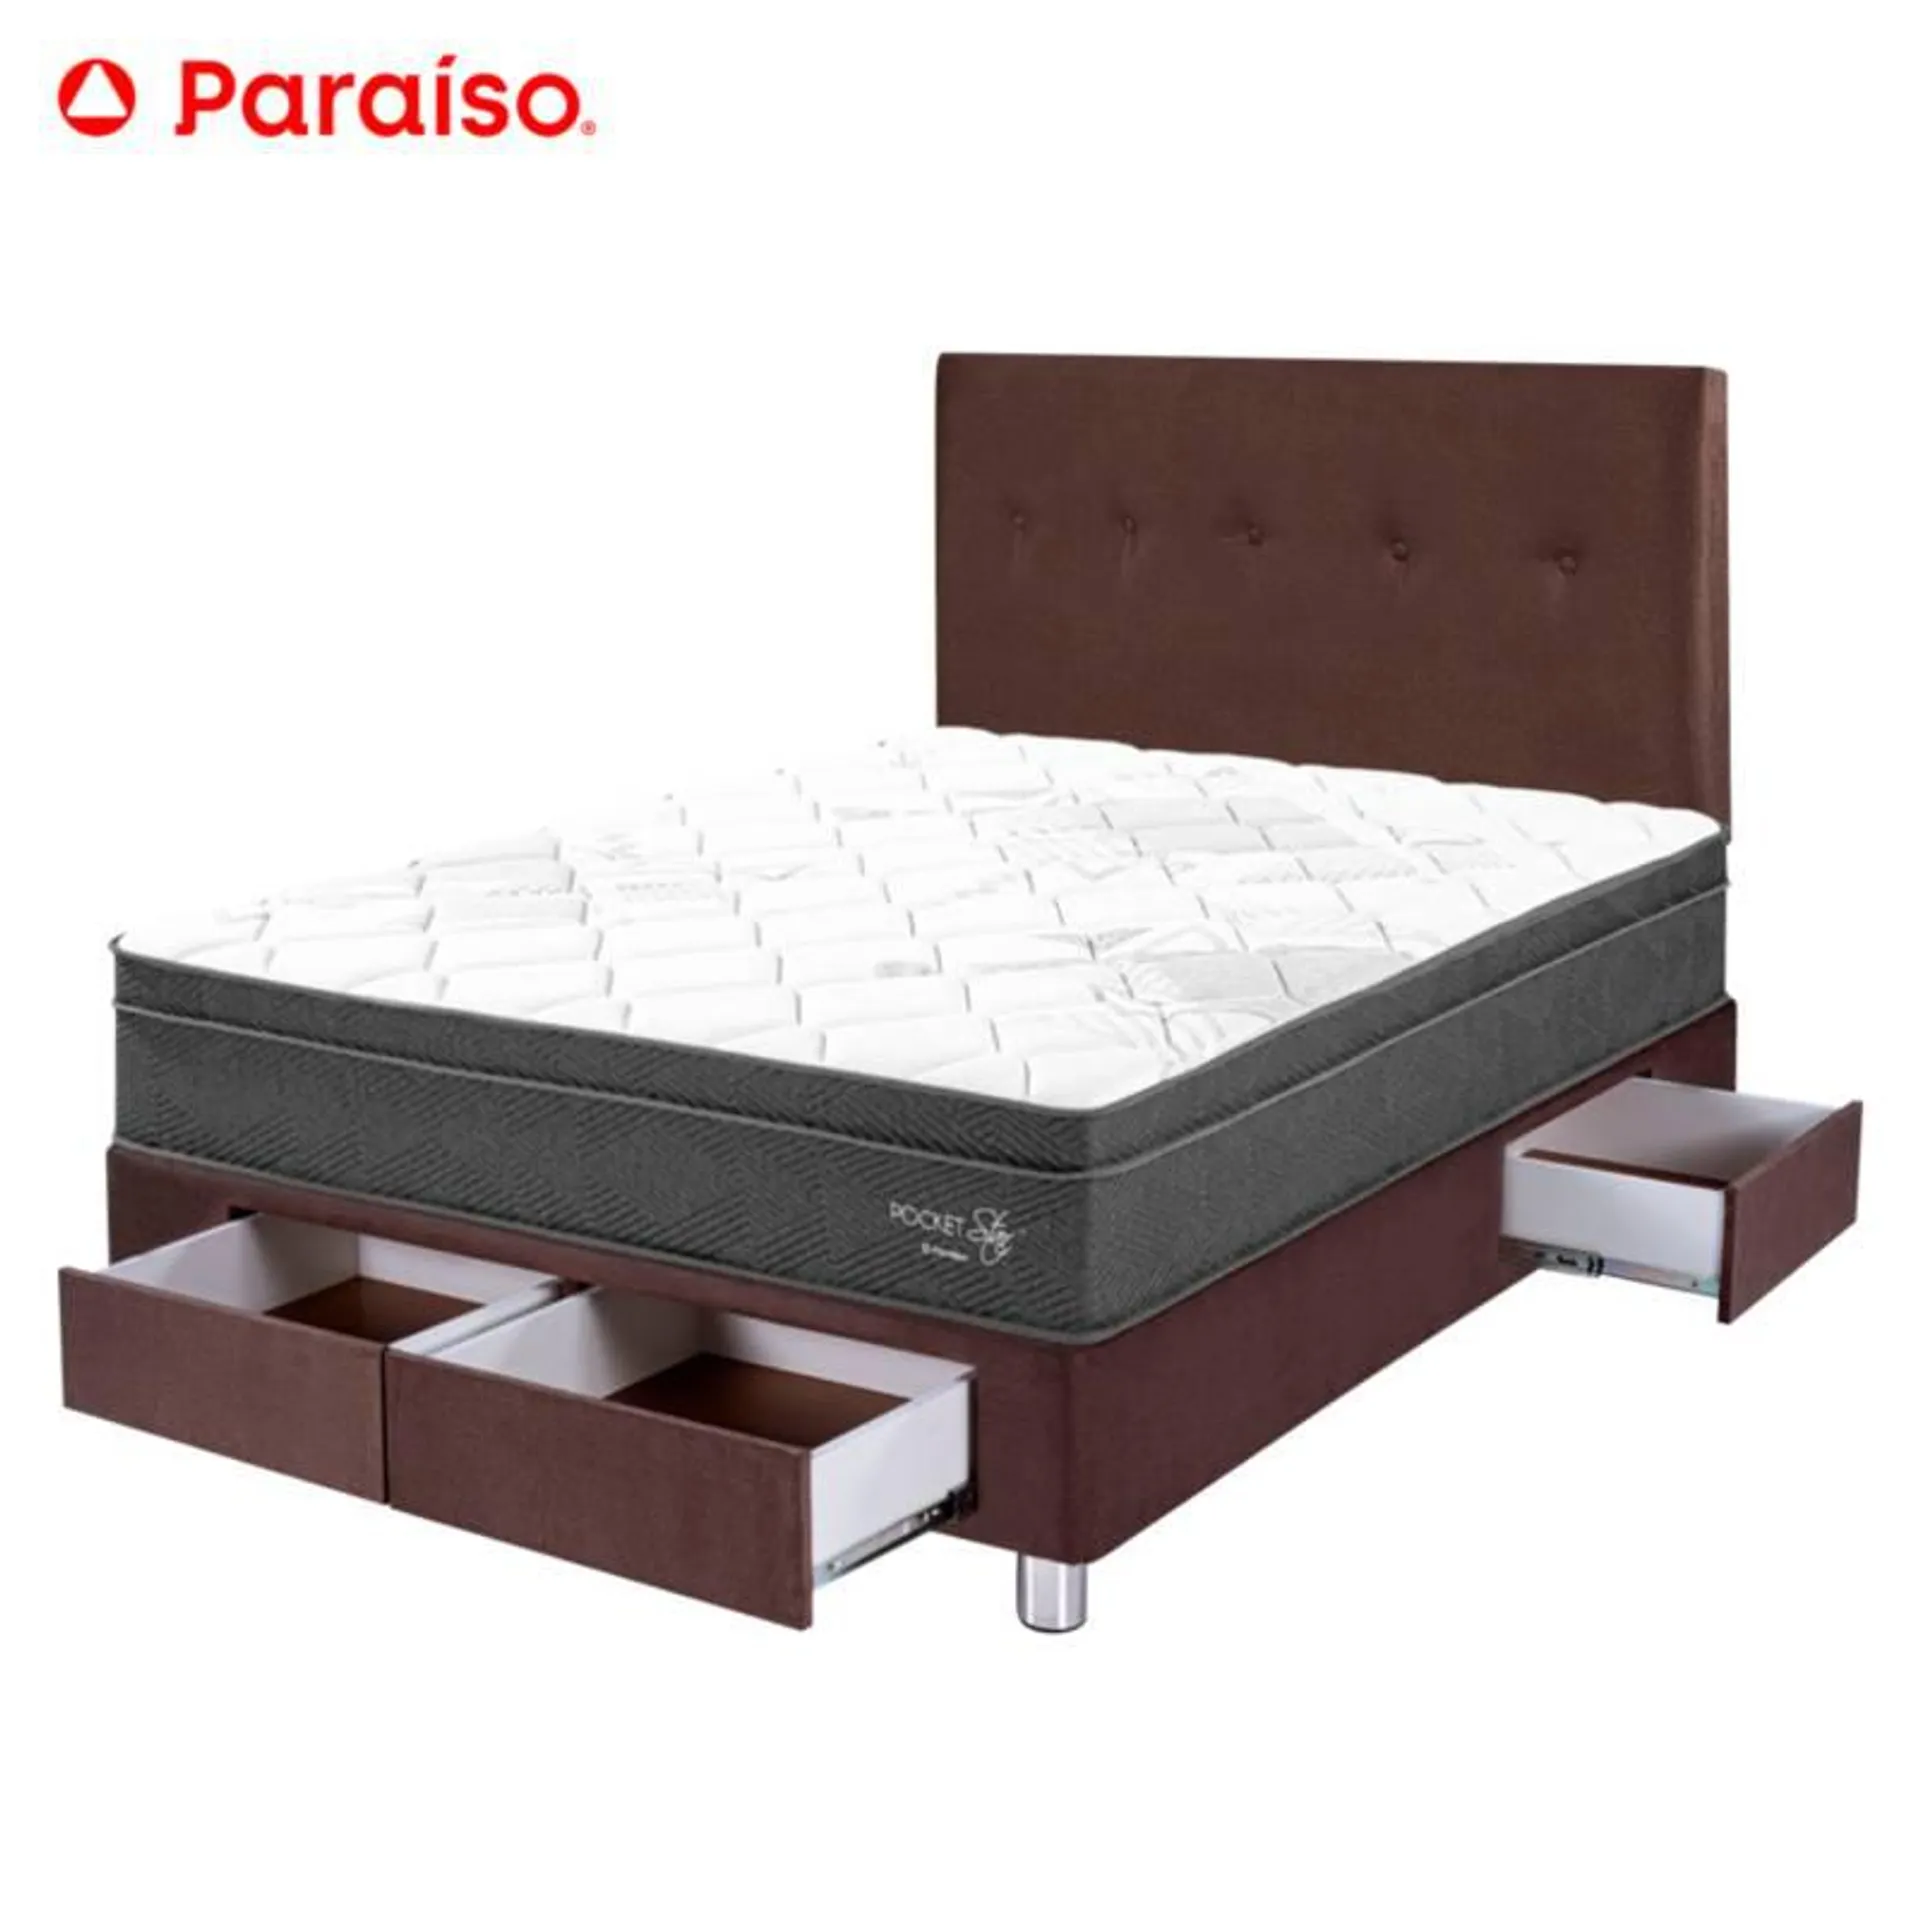 Dormitorio con Cajones Paraíso Pocket Star 2 Plazas Chocolate + Colchón + 2 Almohadas + Protector